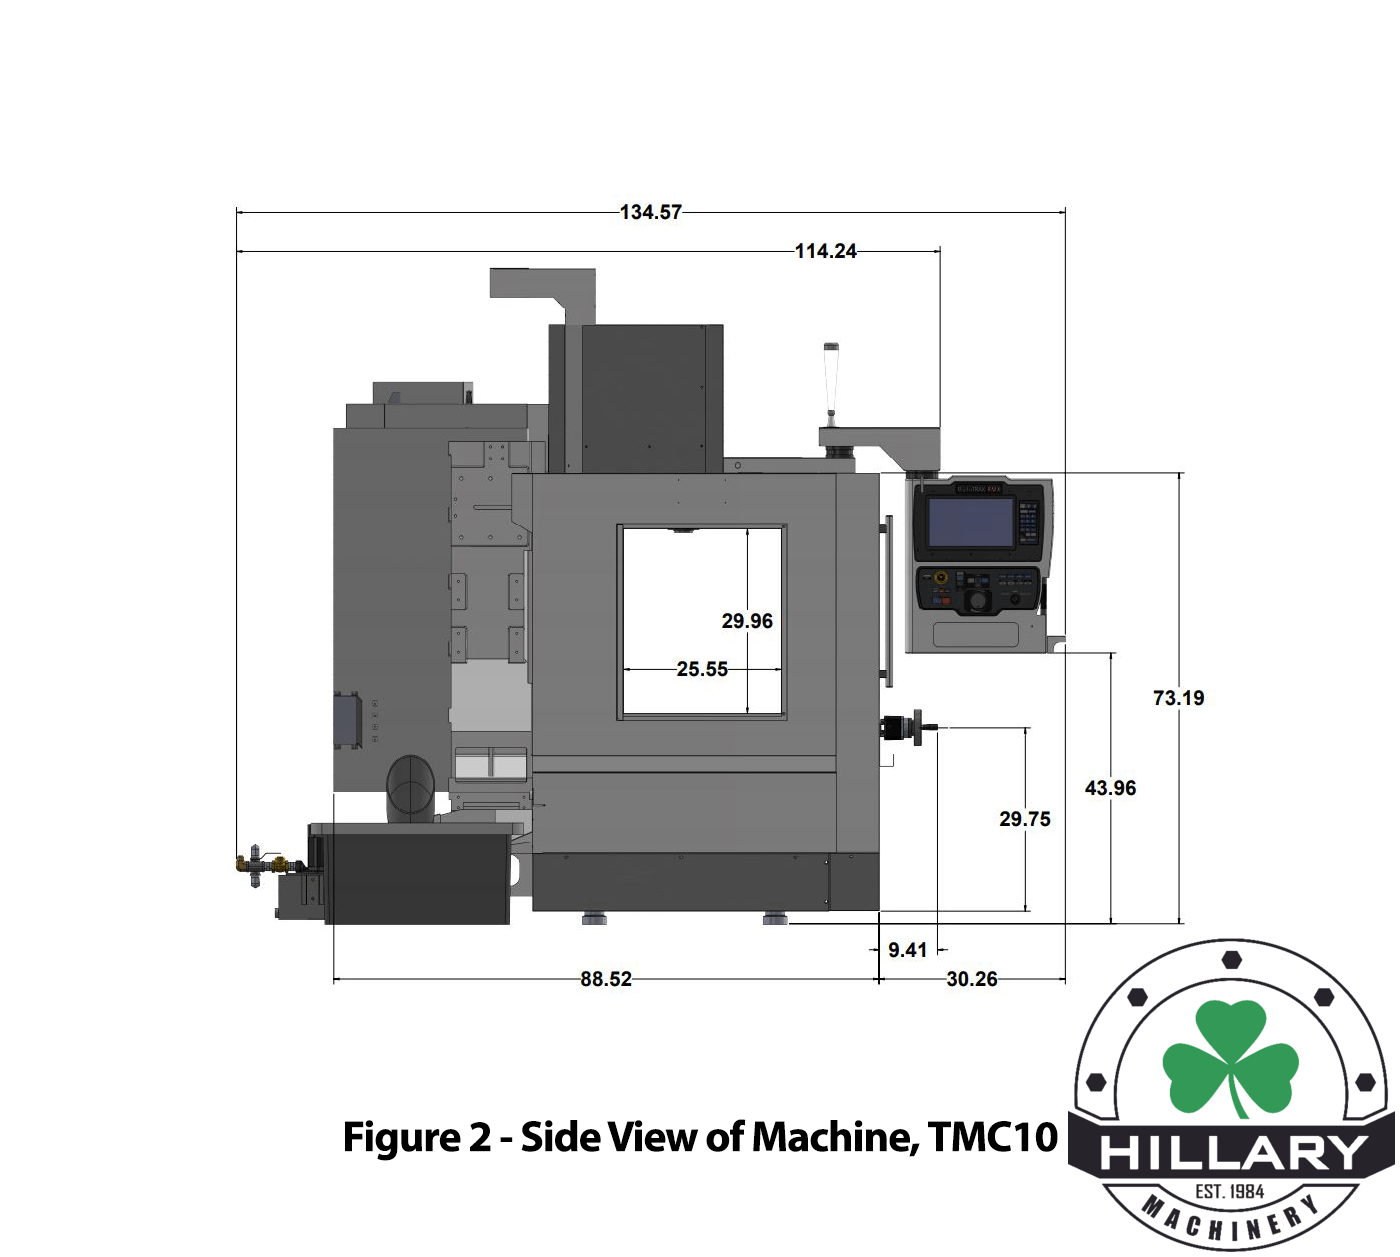 SOUTHWESTERN INDUSTRIES TMC10 Tool Room Mills | Hillary Machinery